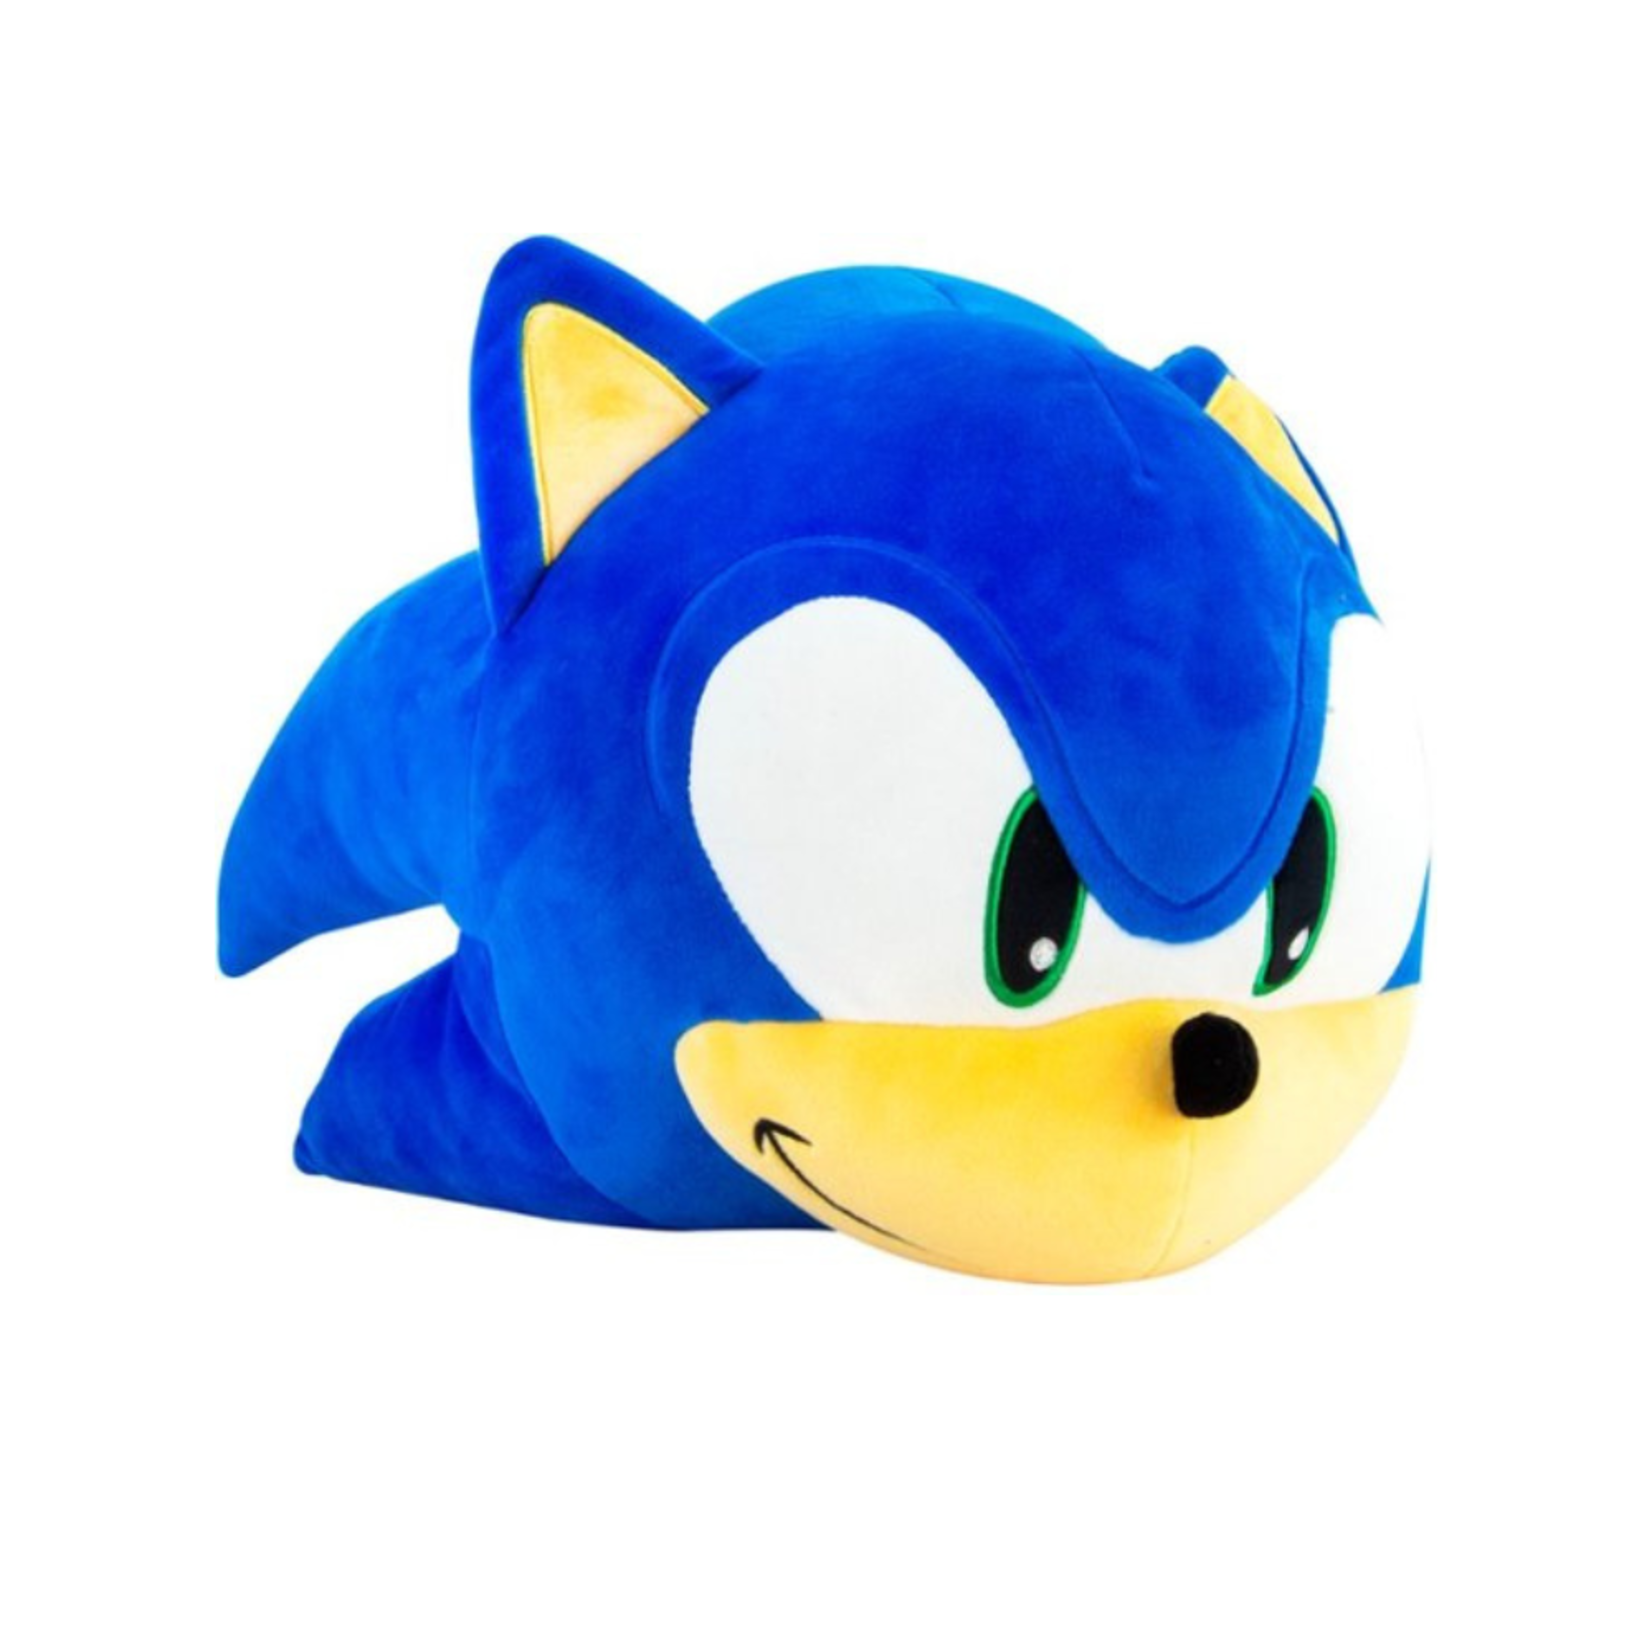 Tomy 15-inch Sonic the Hedgehog Mega Plush